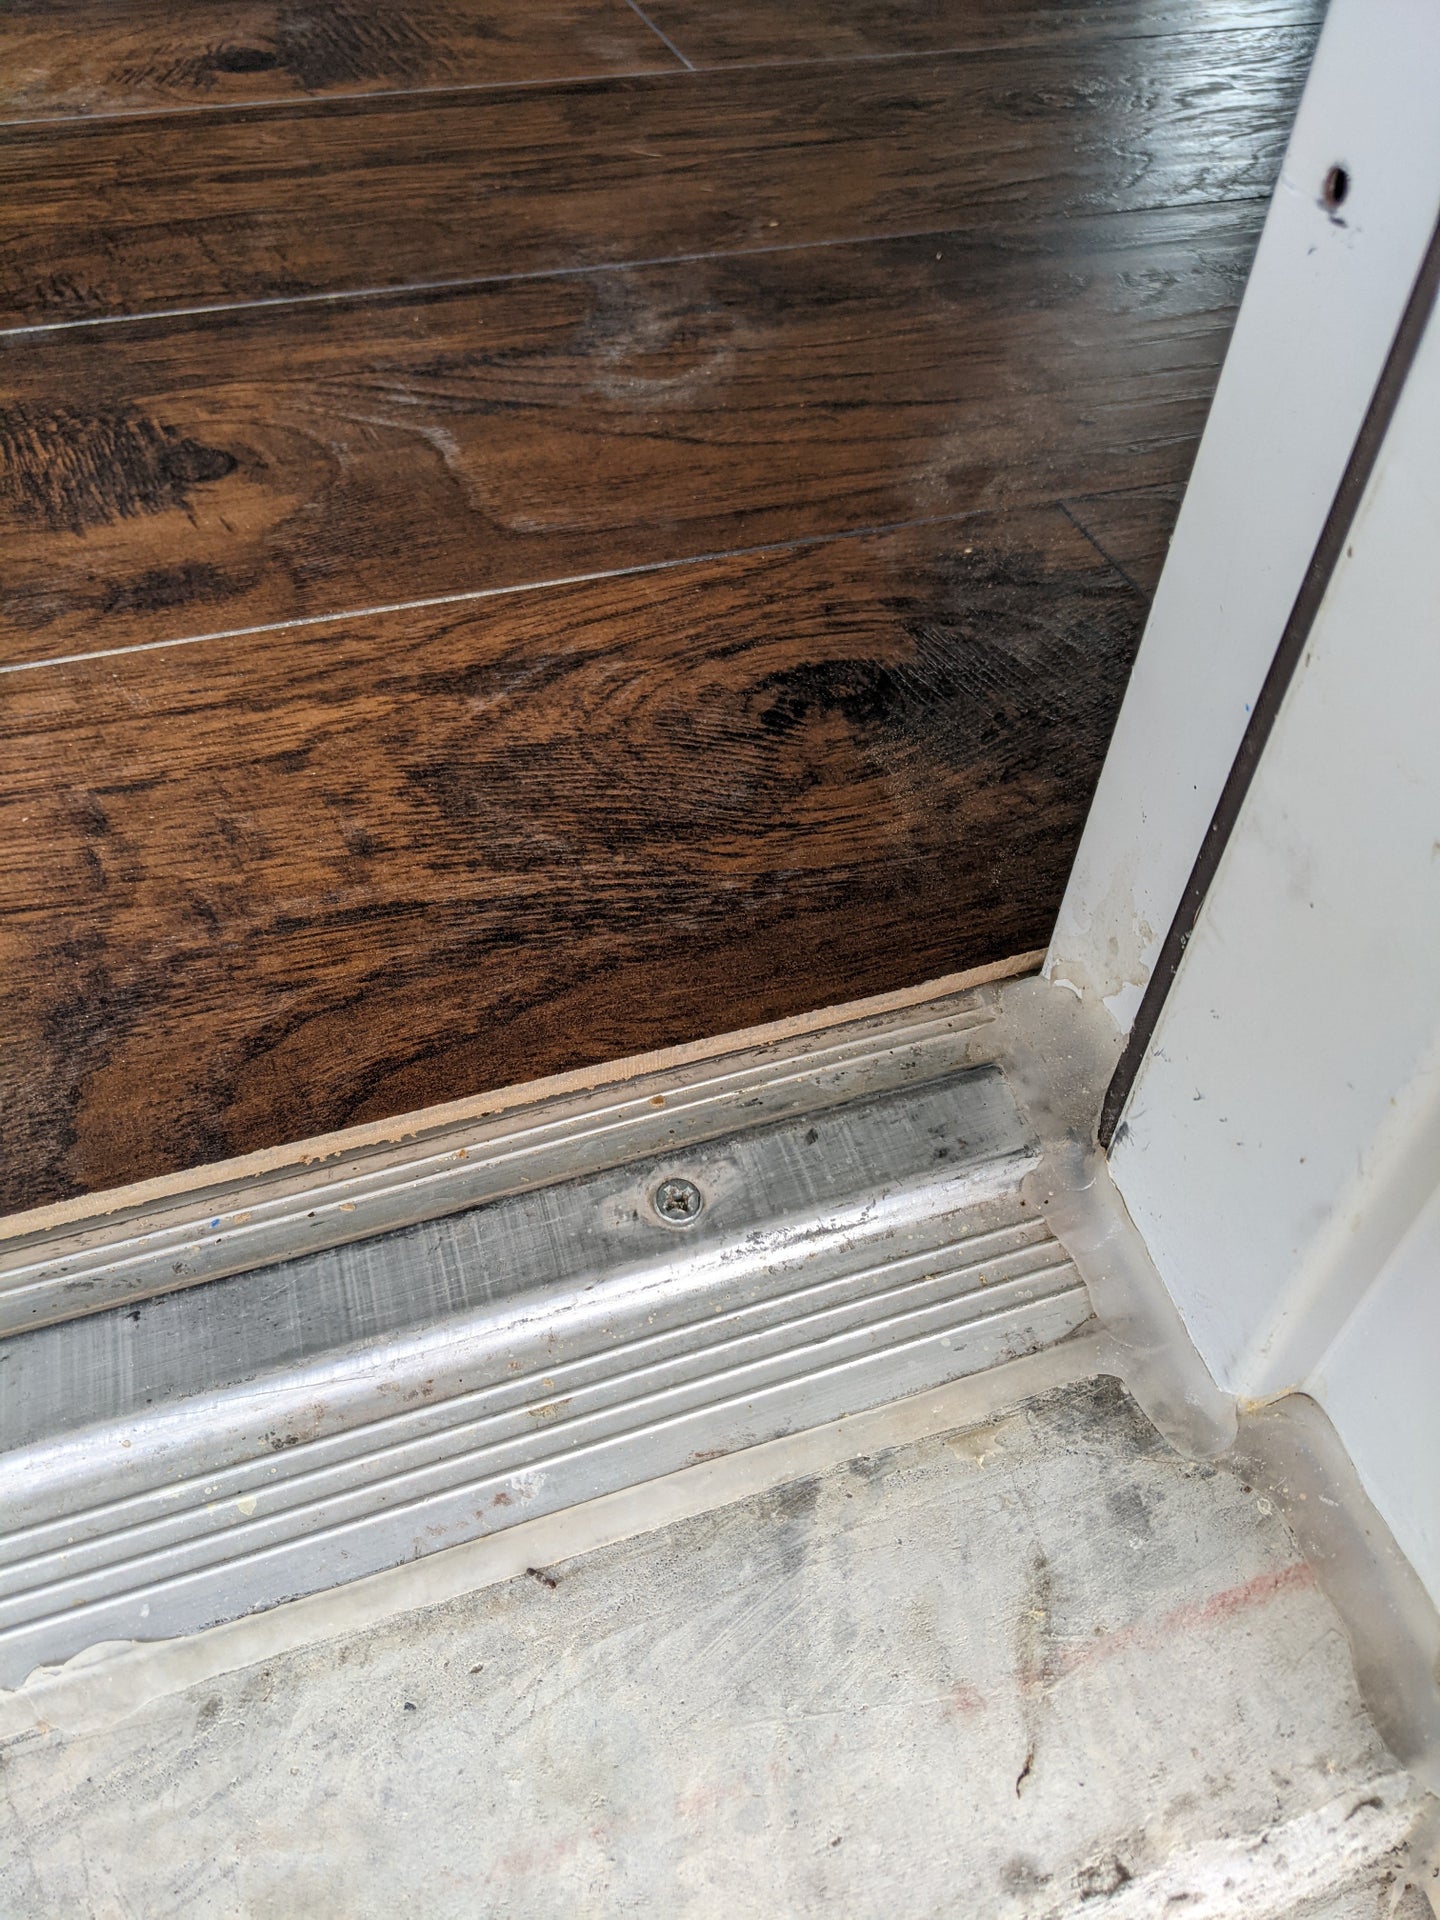 Threshold issue : r/Flooring